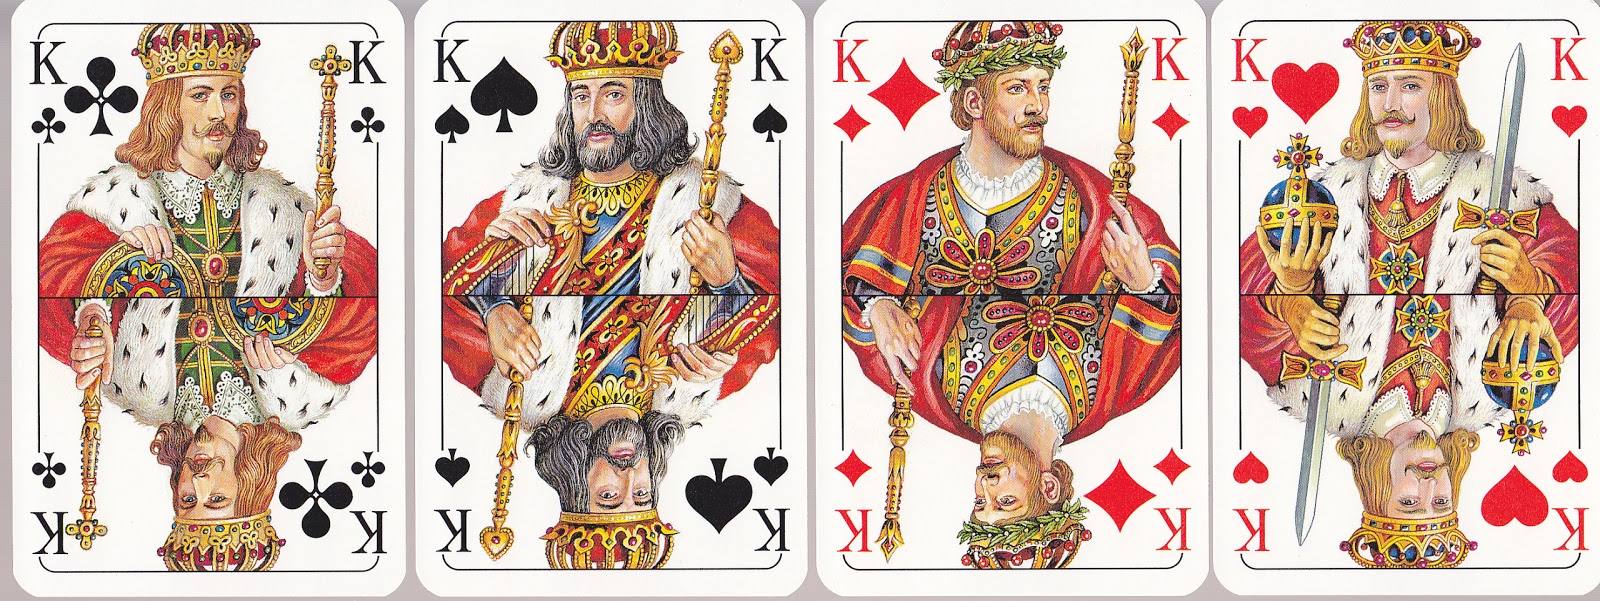 Ile Jest Króli W Talii 52 Kart Kolekcjoner talii kart